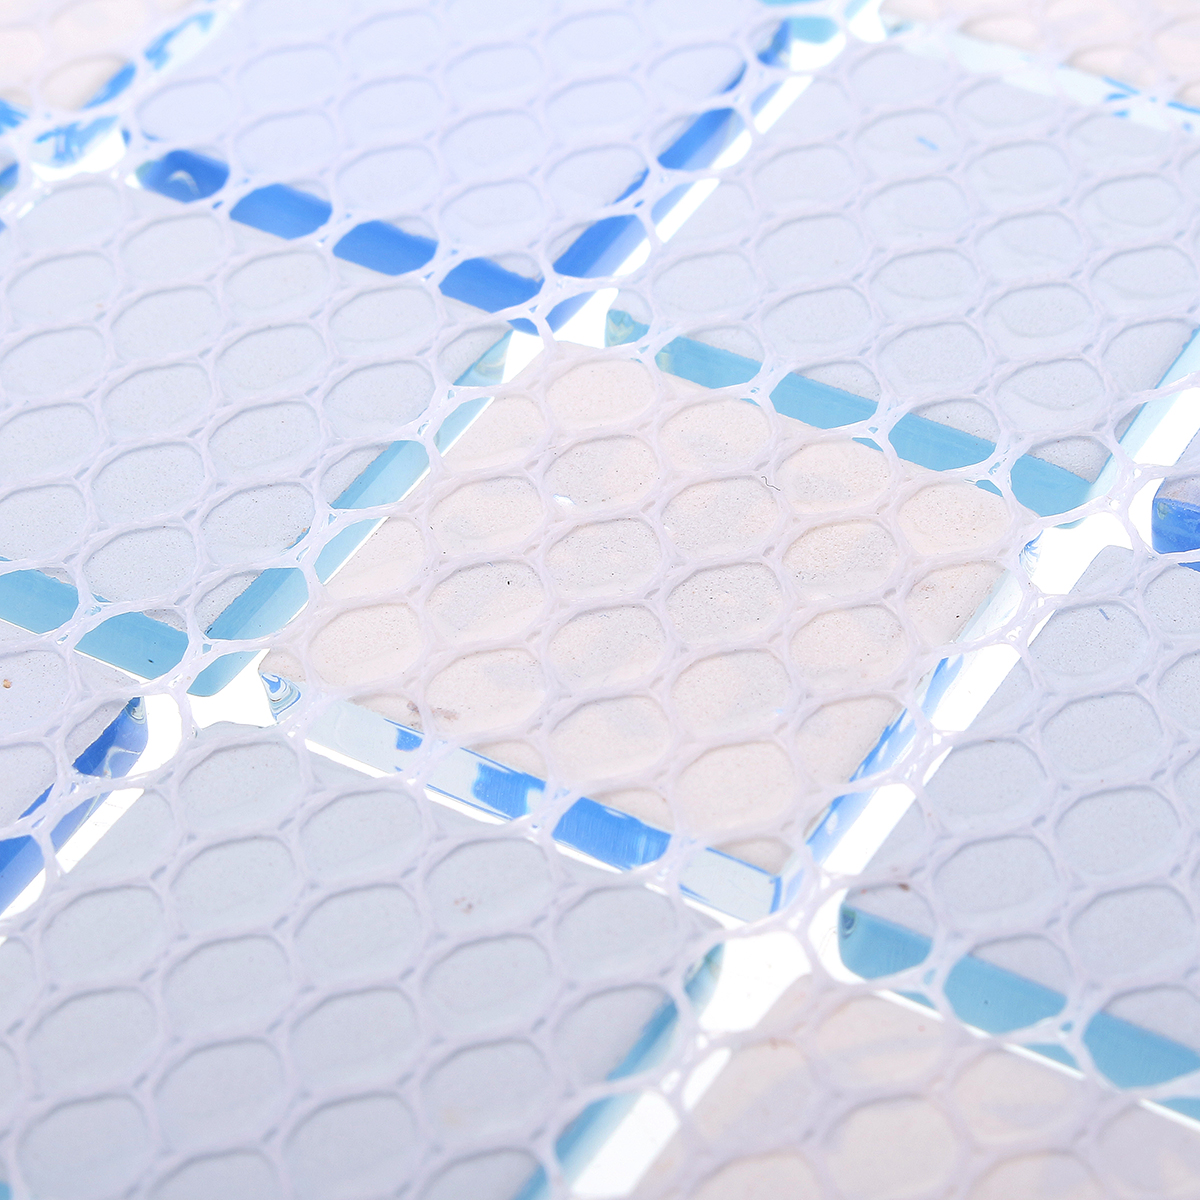 Waterproof-Crystal-3D-Mosaic-Tiles-Wall-Sticker-for-Bathroom-Decor-1121518